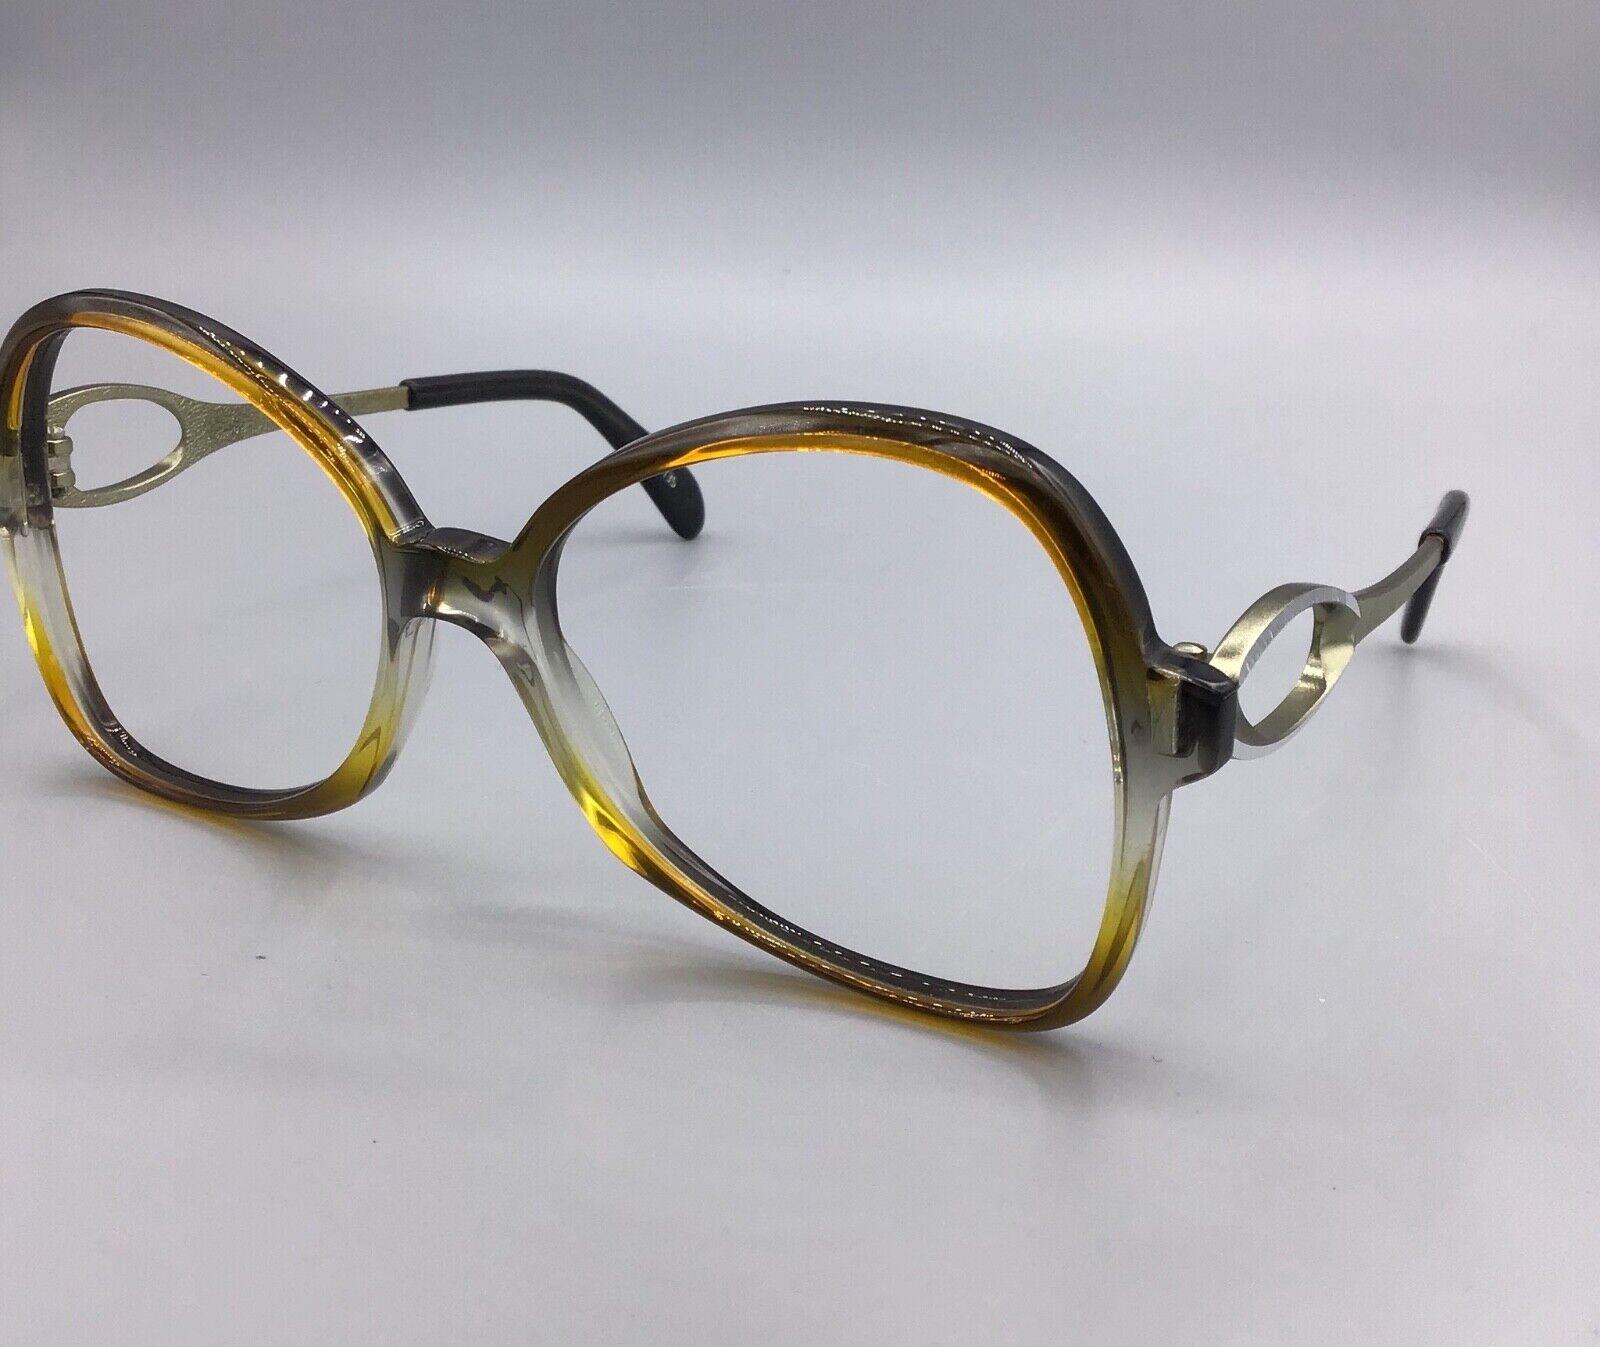 Metzler occhiale vintage Germany brillen lunettes Eyewear